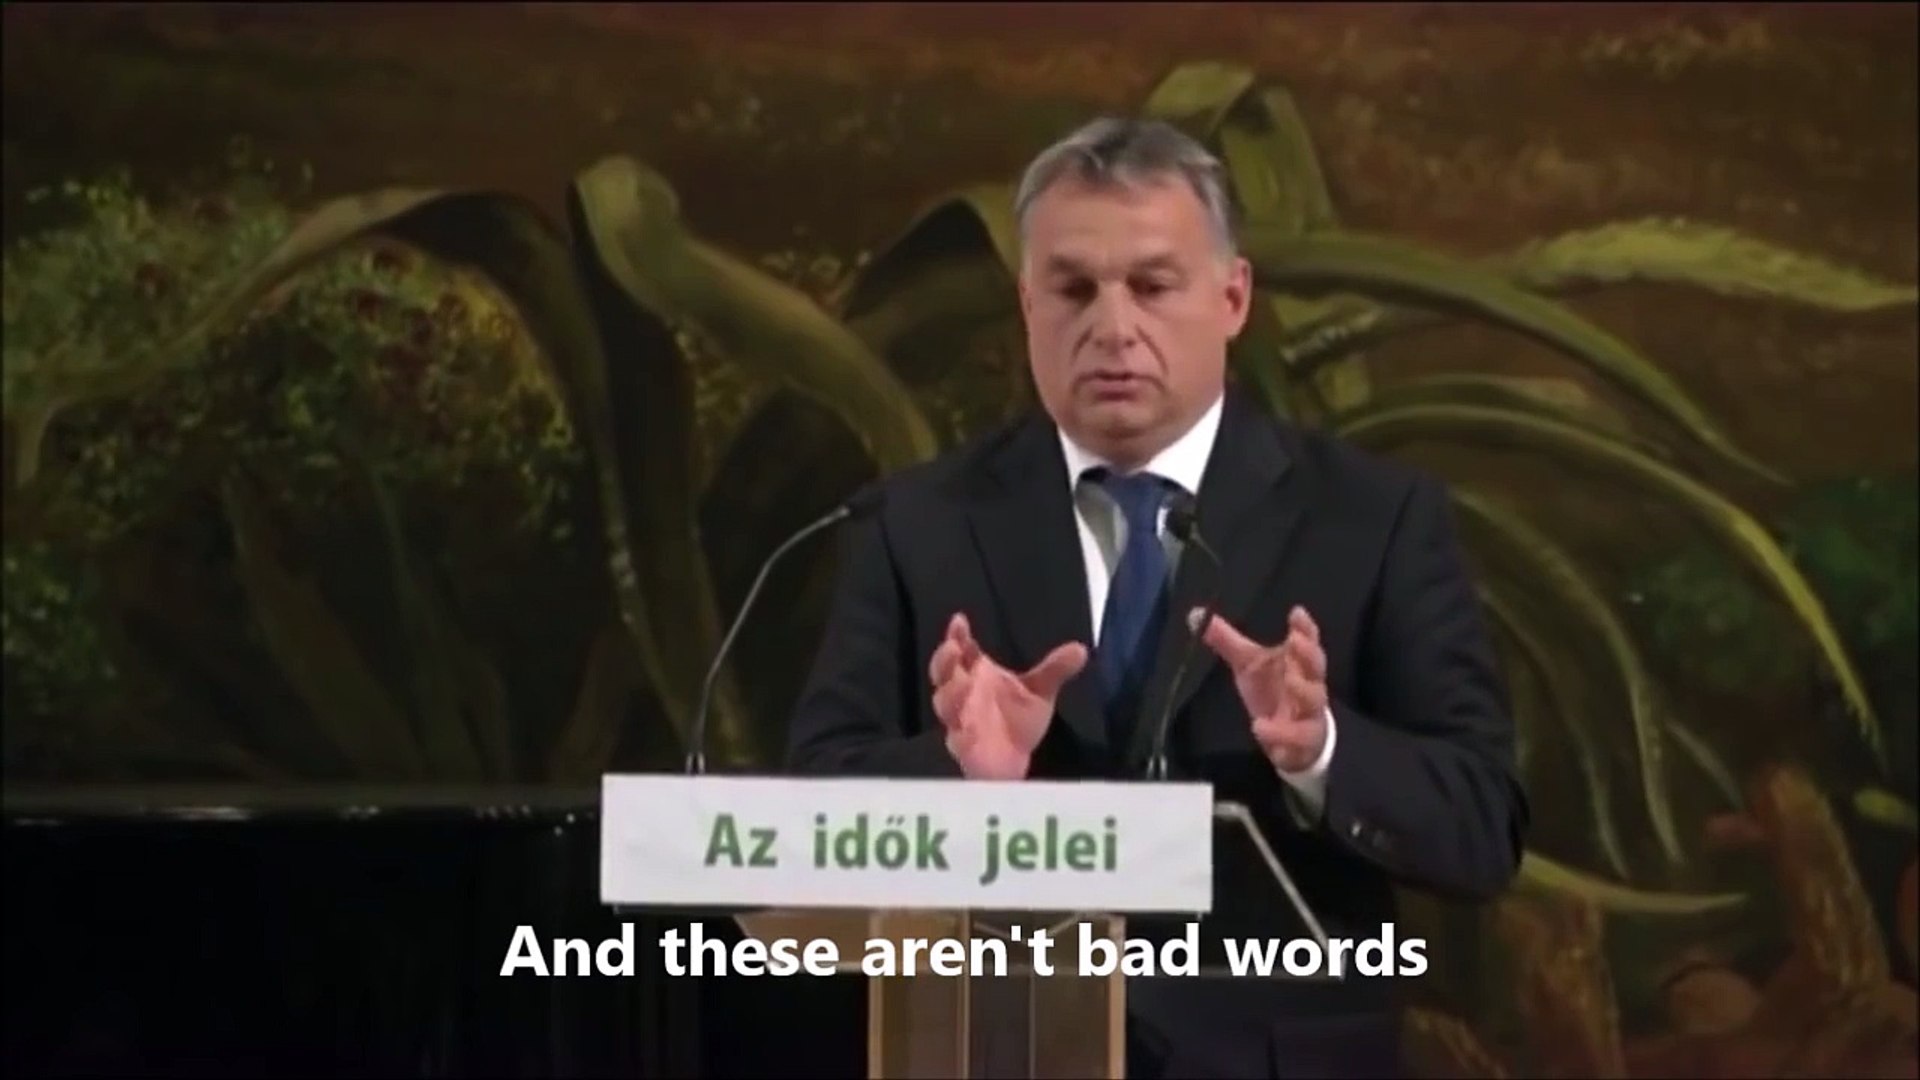 Viktor Orbán Jokes about Austria's